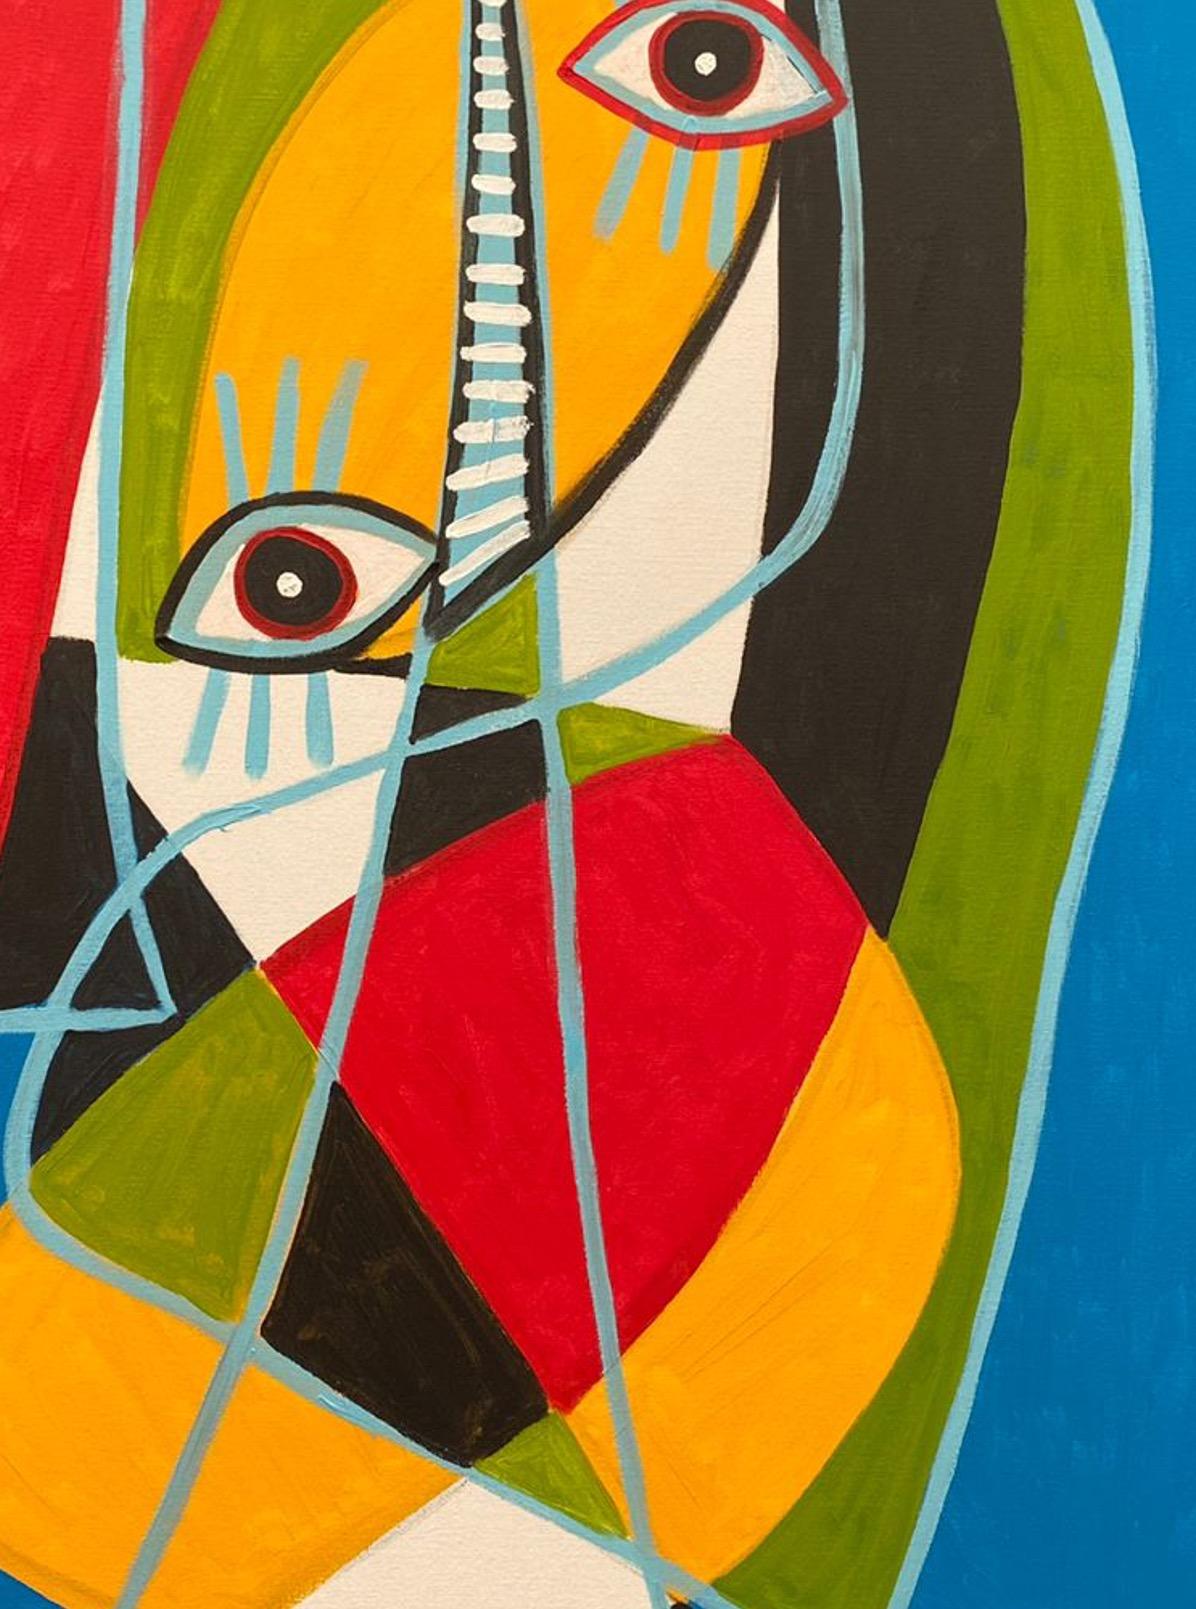 Contemporary Art, Abstract Painting
Acrylic on canvas
152x110cm
Signed 


About the artist
Enrique Pichardo (Mexico City, 1973) graduated from Escuela Nacional de Pintura, Escultura y Grabado (ENPEG) “La Esmeralda”. As a Mexican Contemporary